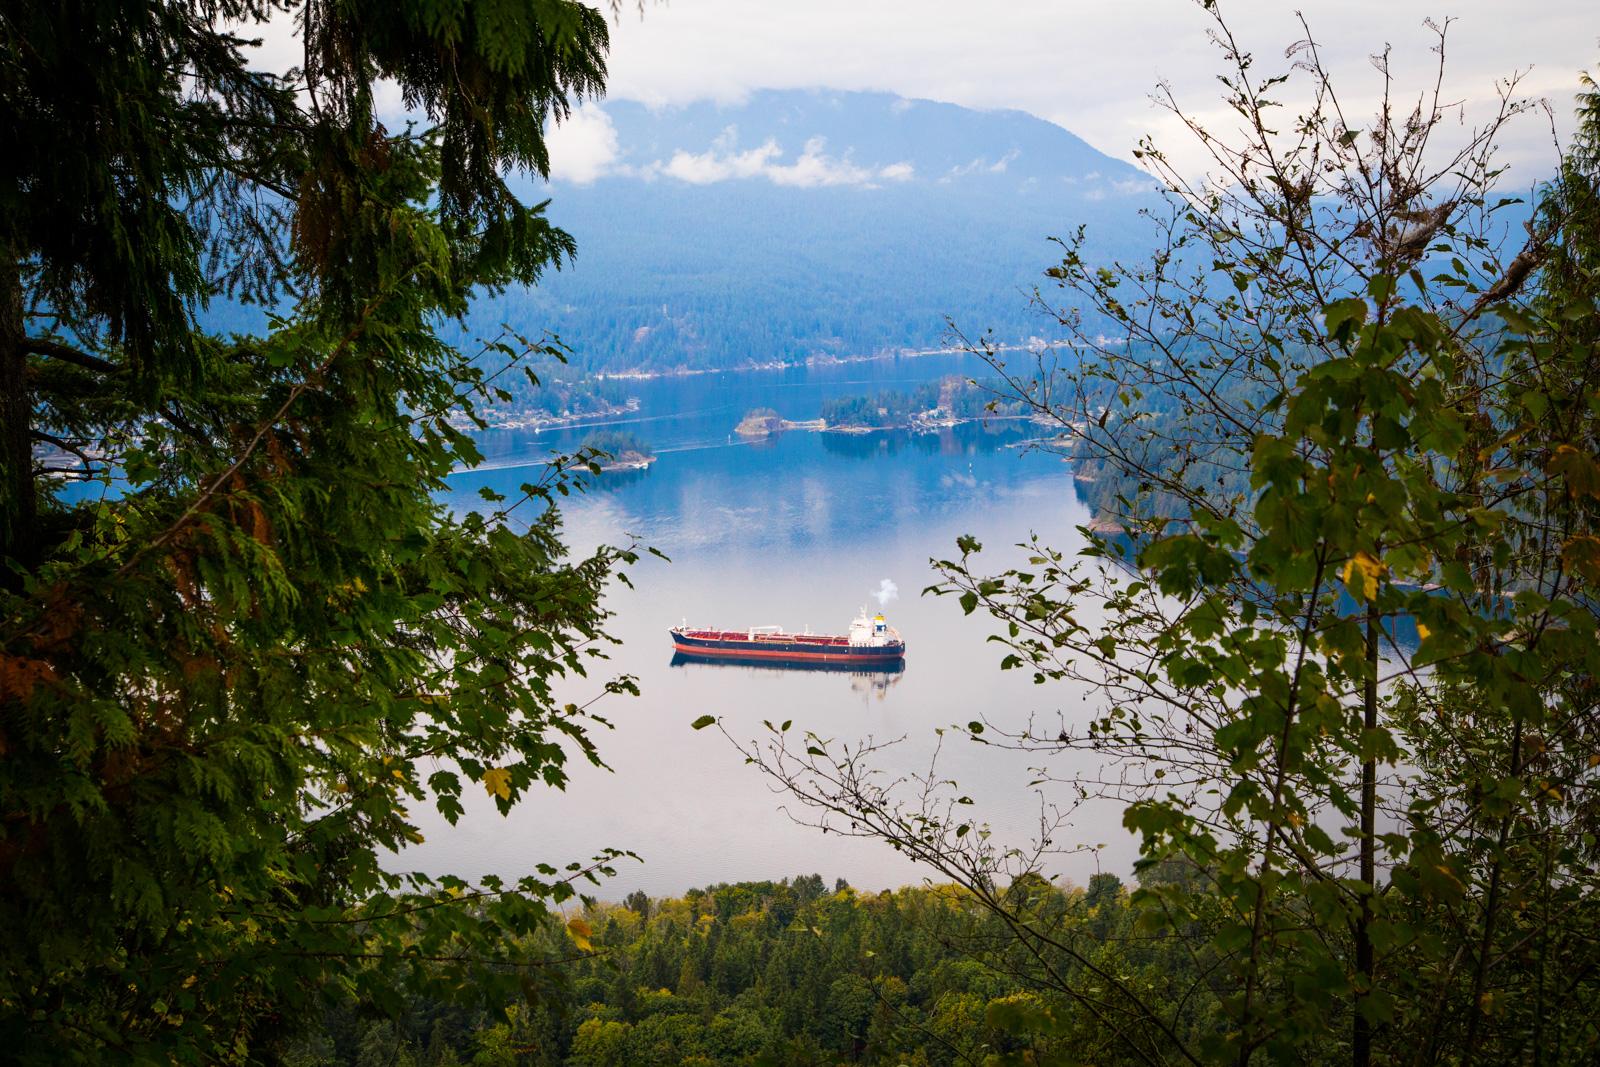 Beautiful British Columbia & Vancouver In Stunning Photo